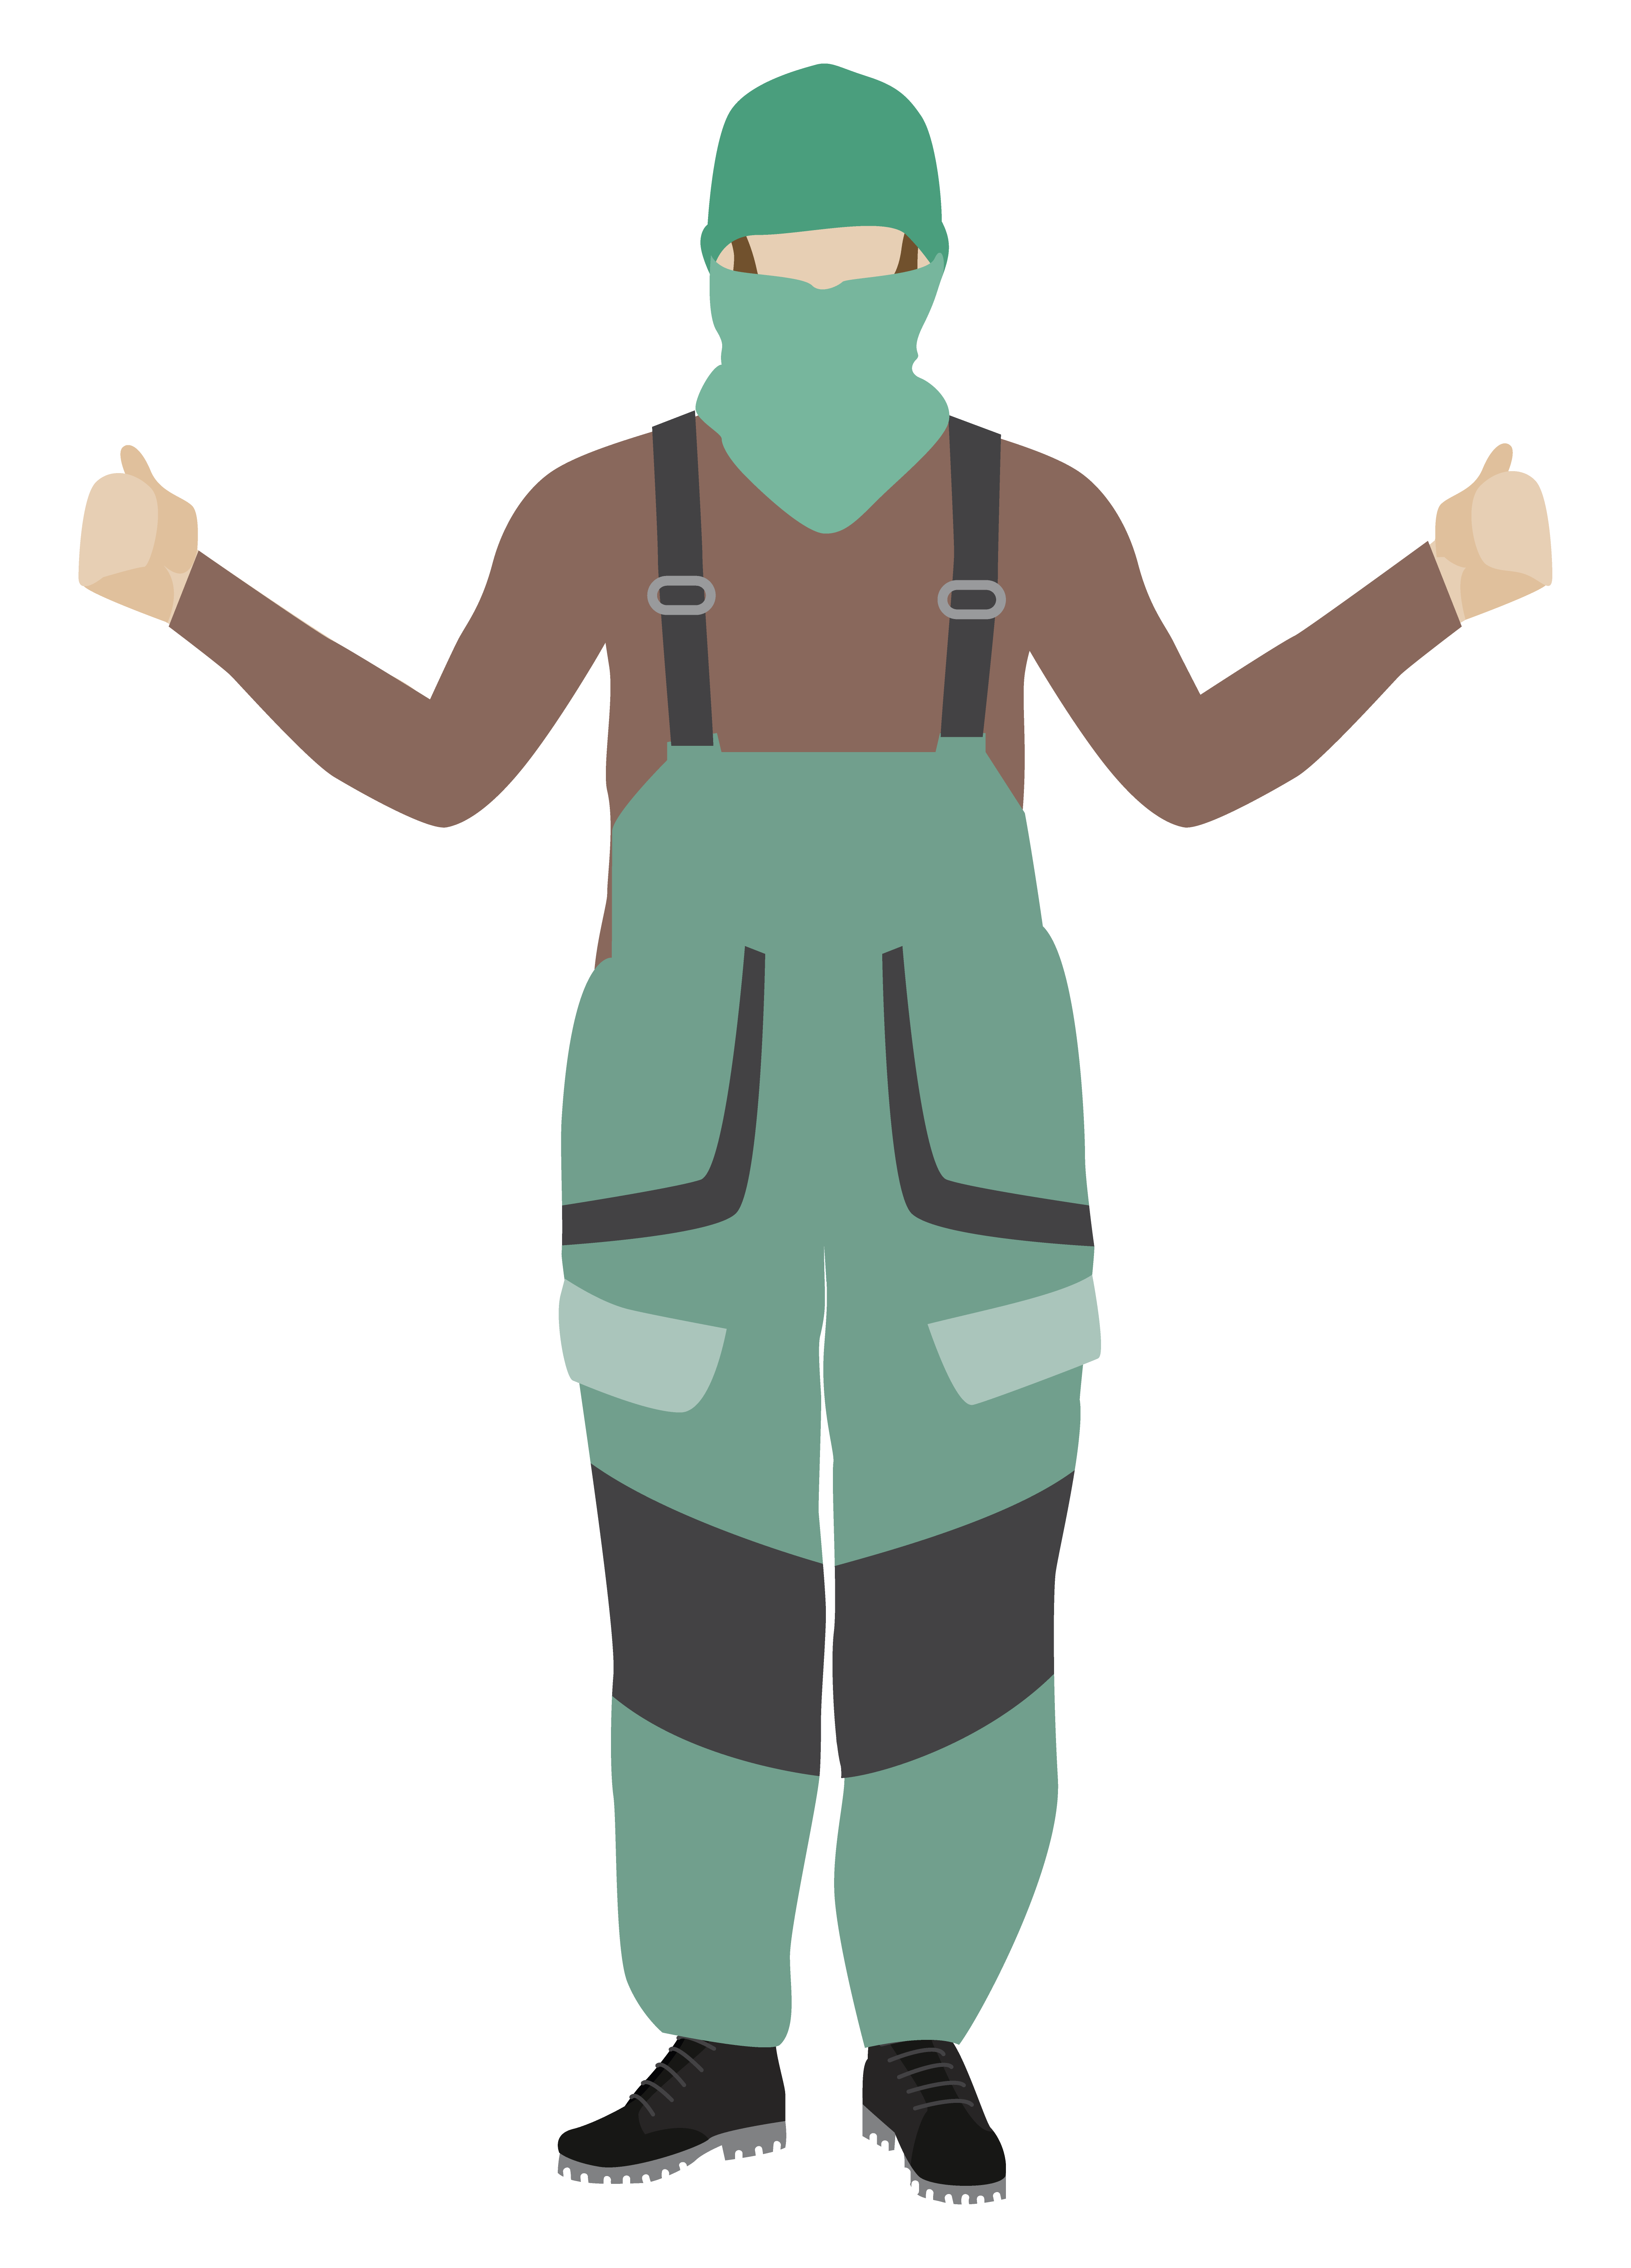 Illustration of man wearing insulating clothing